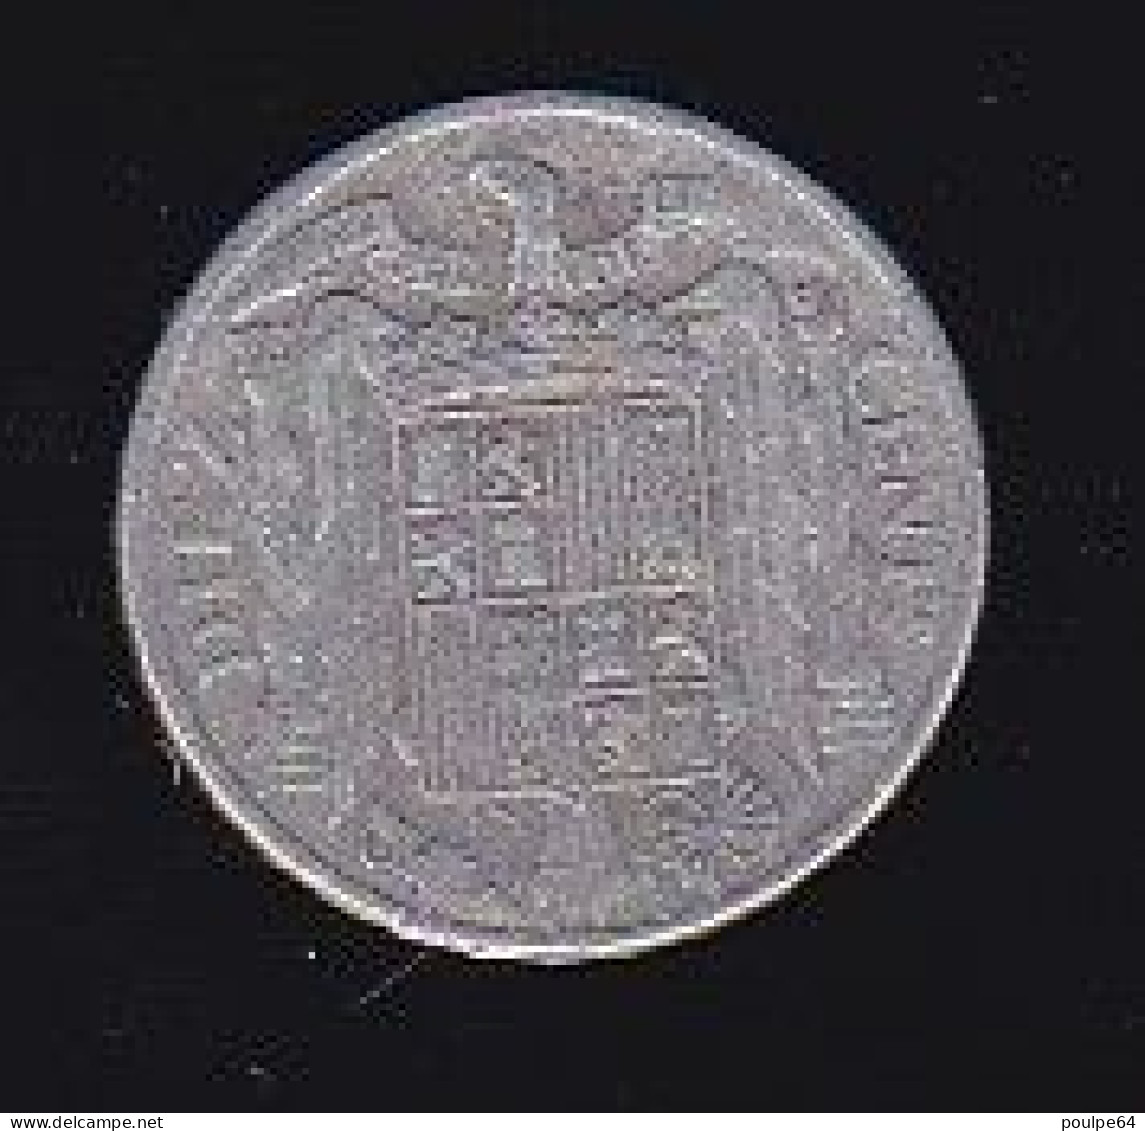 10 Centimes 1941 - 10 Céntimos